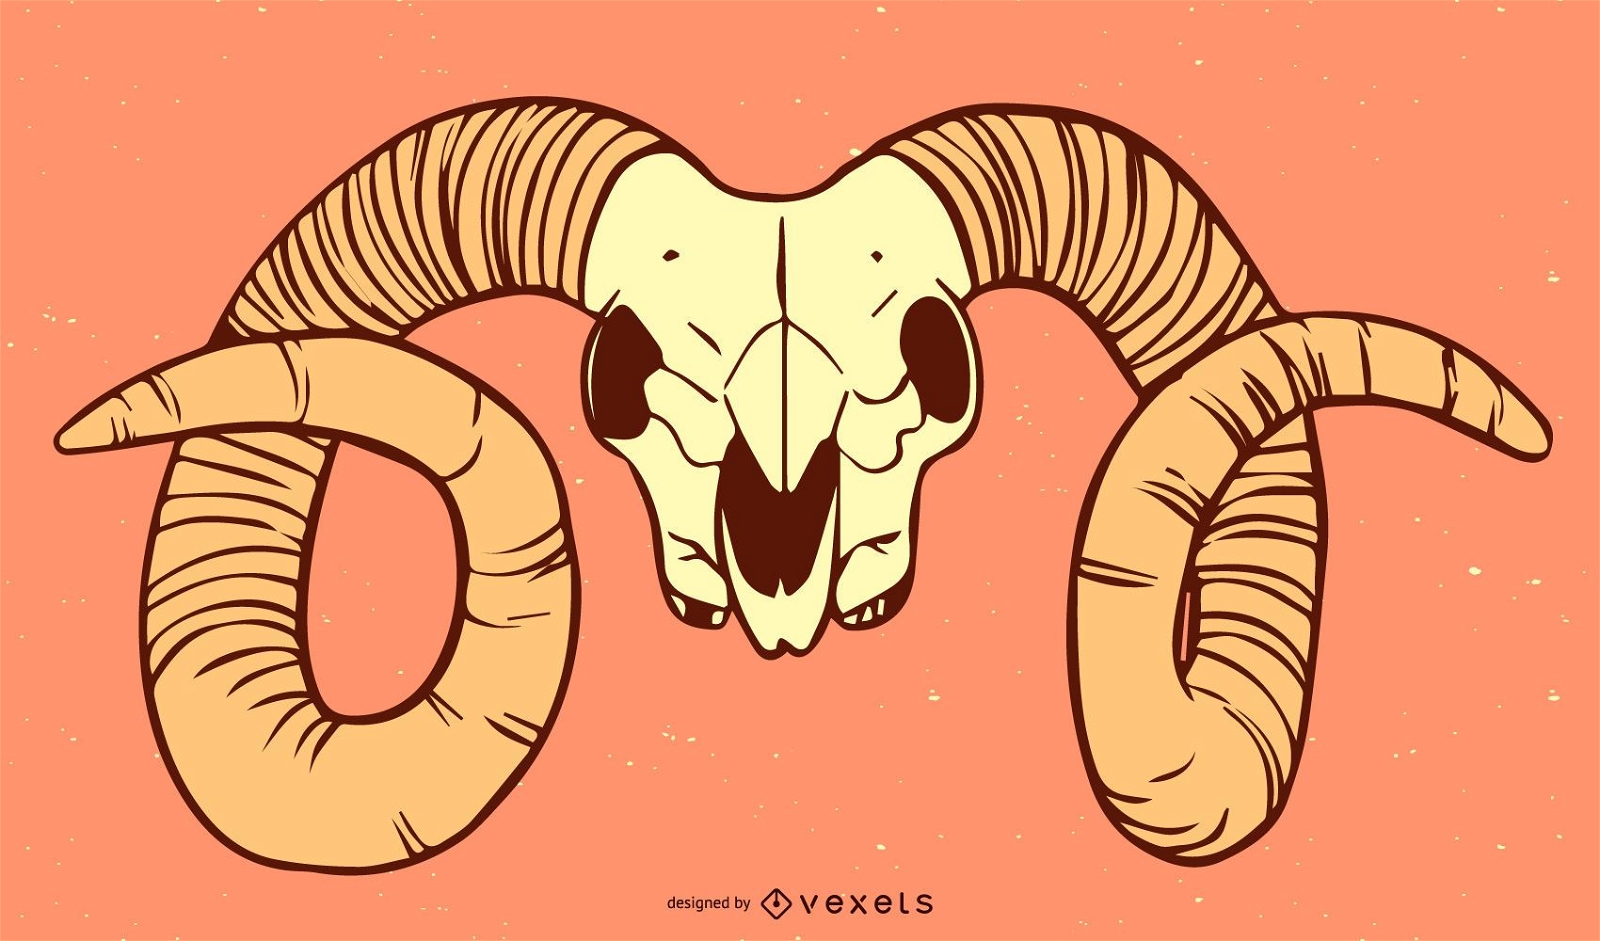 Goat skull illustration